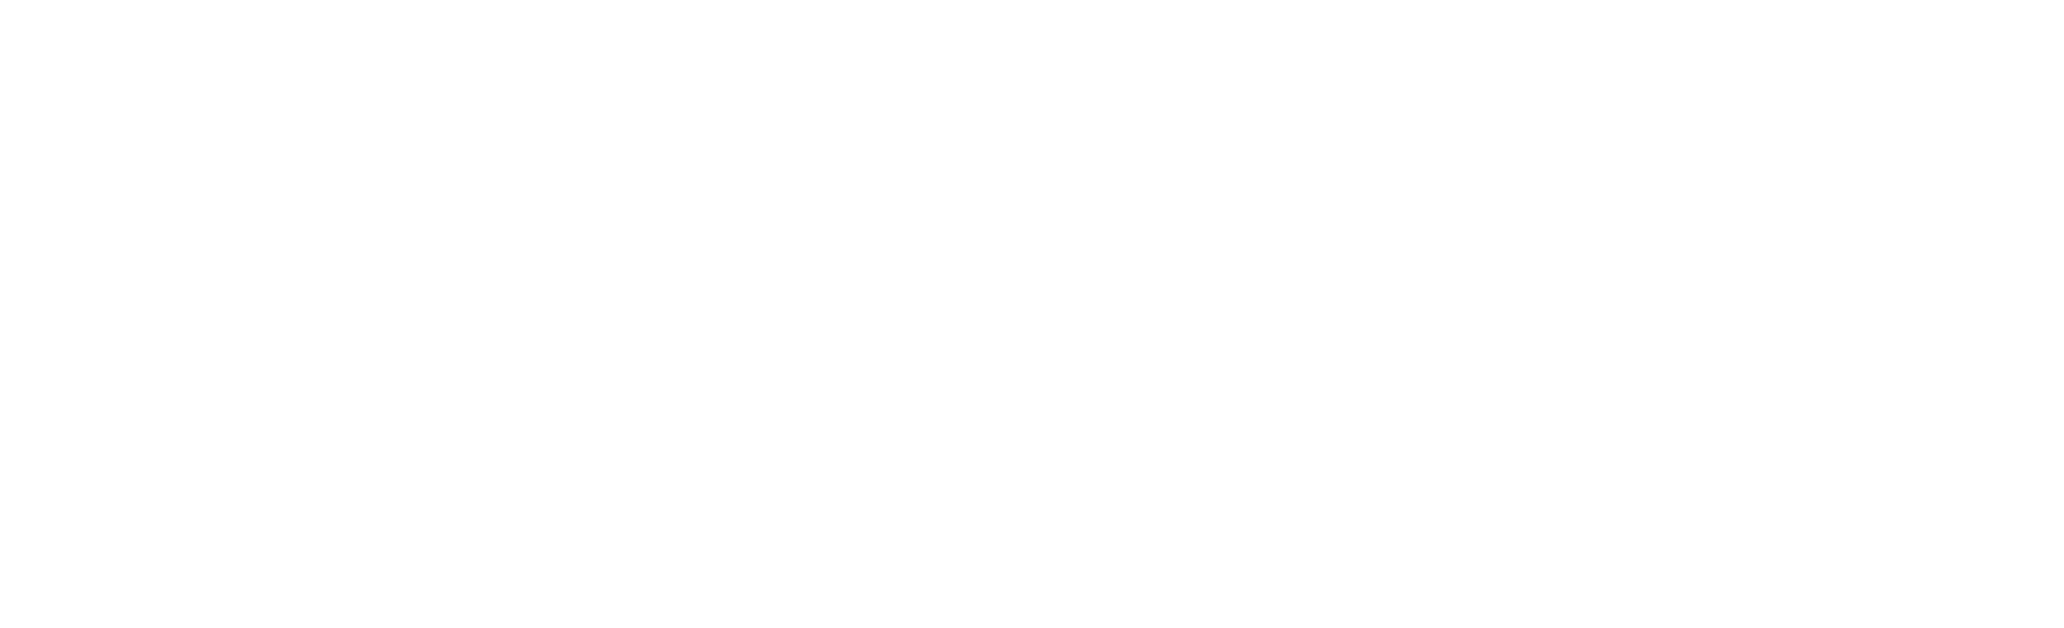 OKG logo_1-02